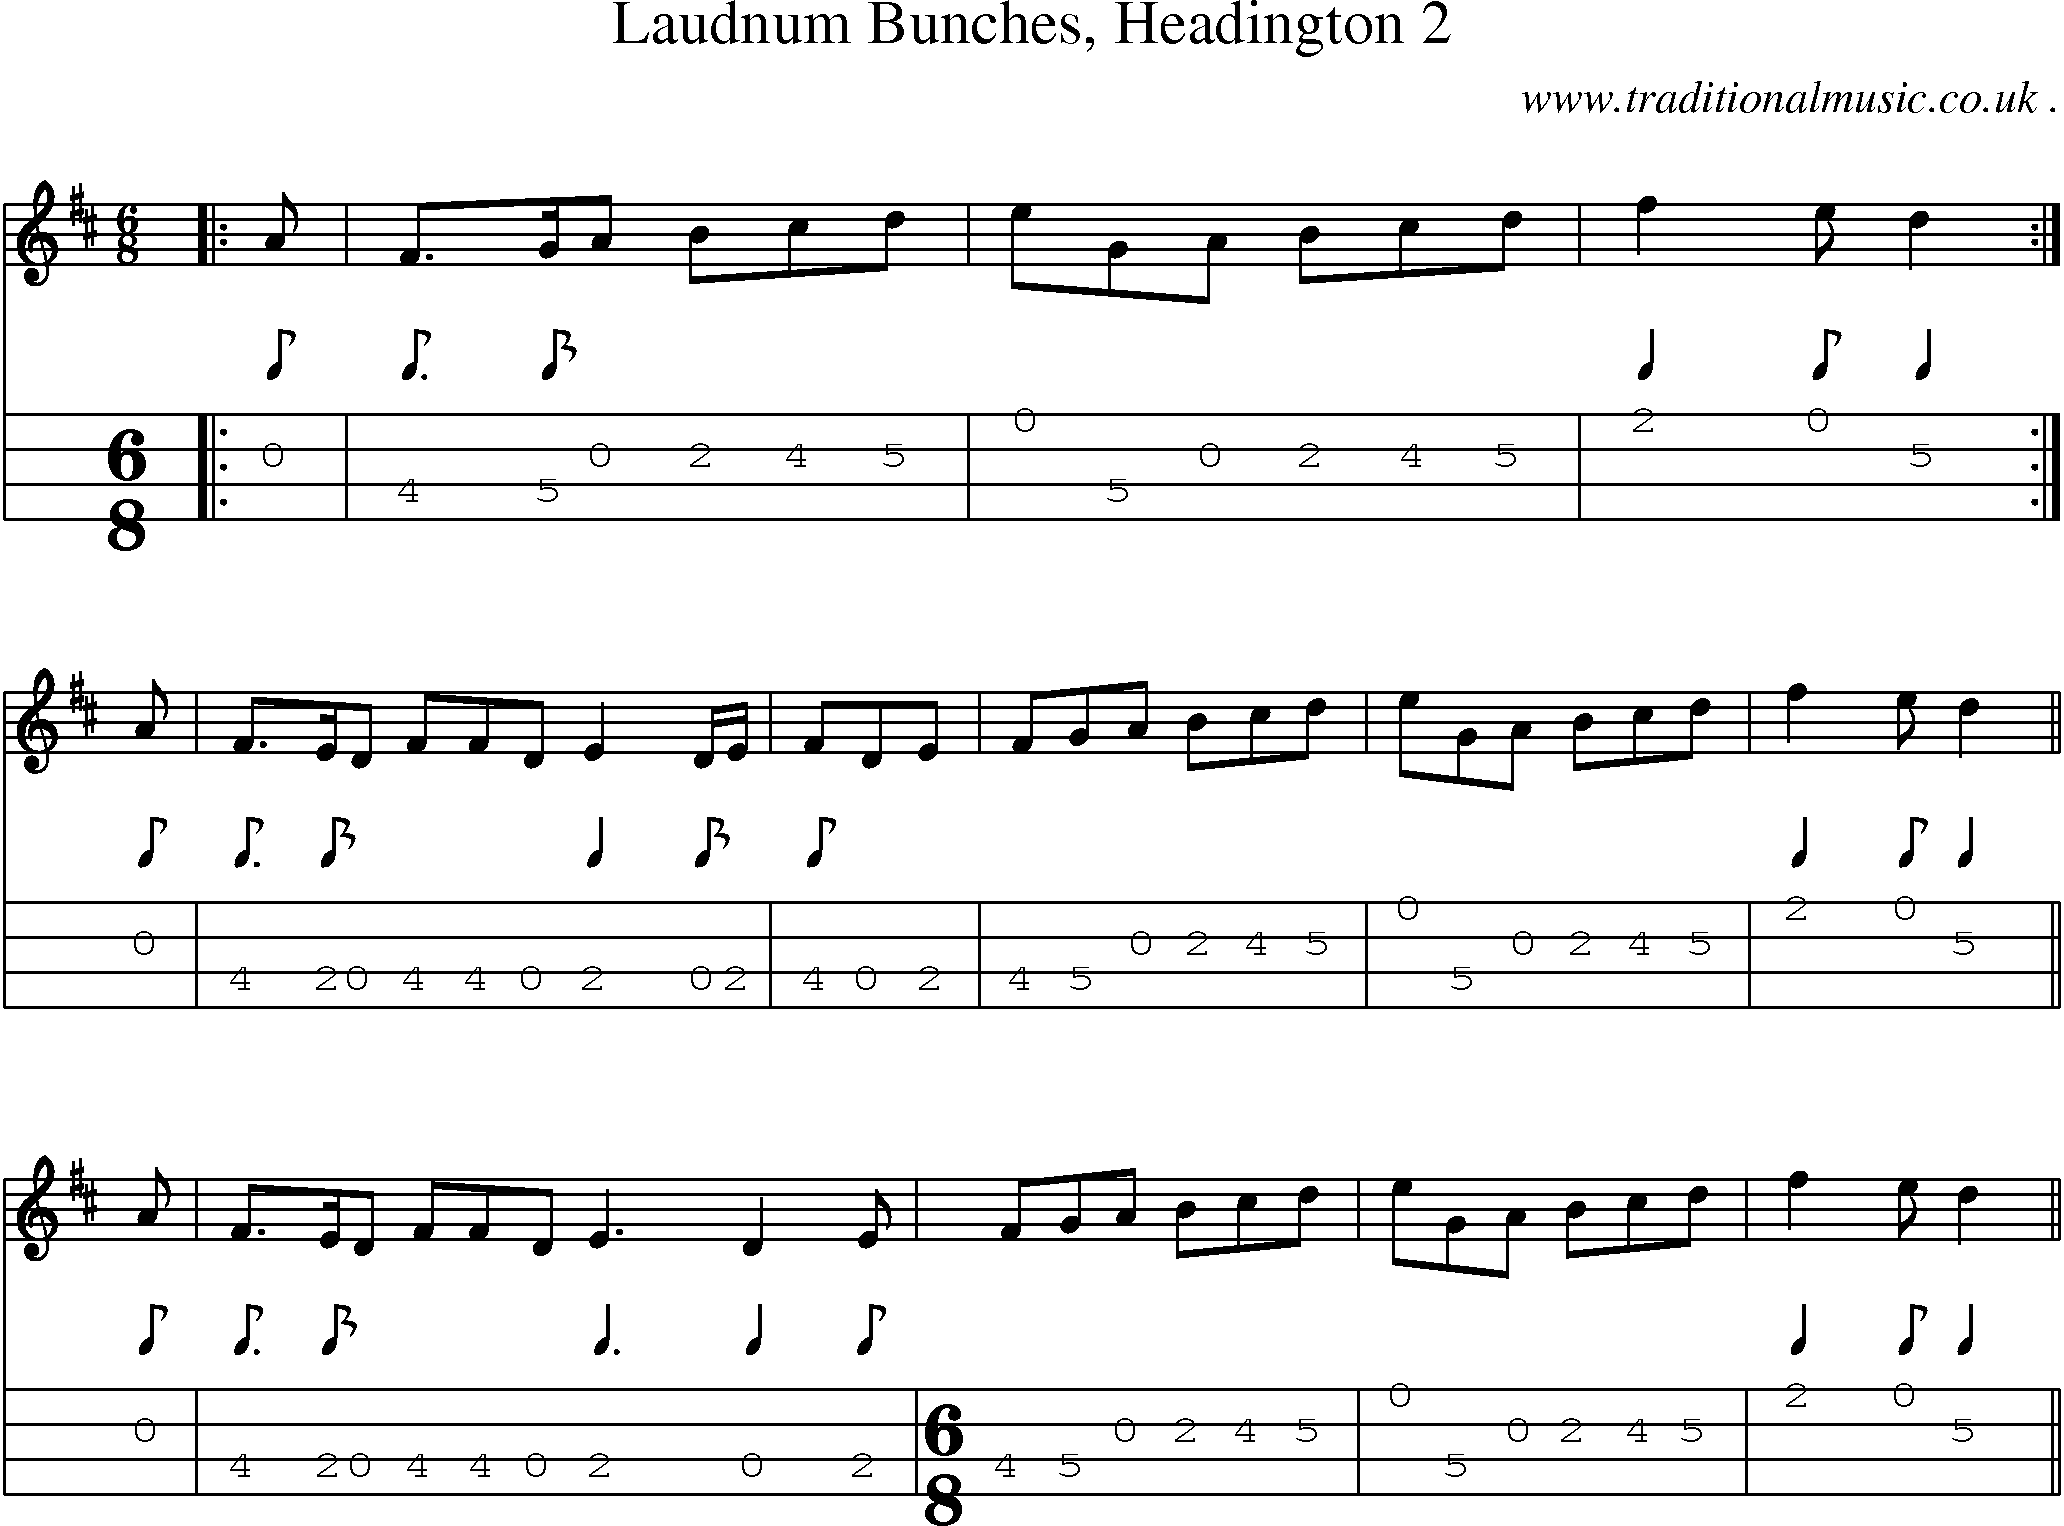 Sheet-Music and Mandolin Tabs for Laudnum Bunches Headington 2